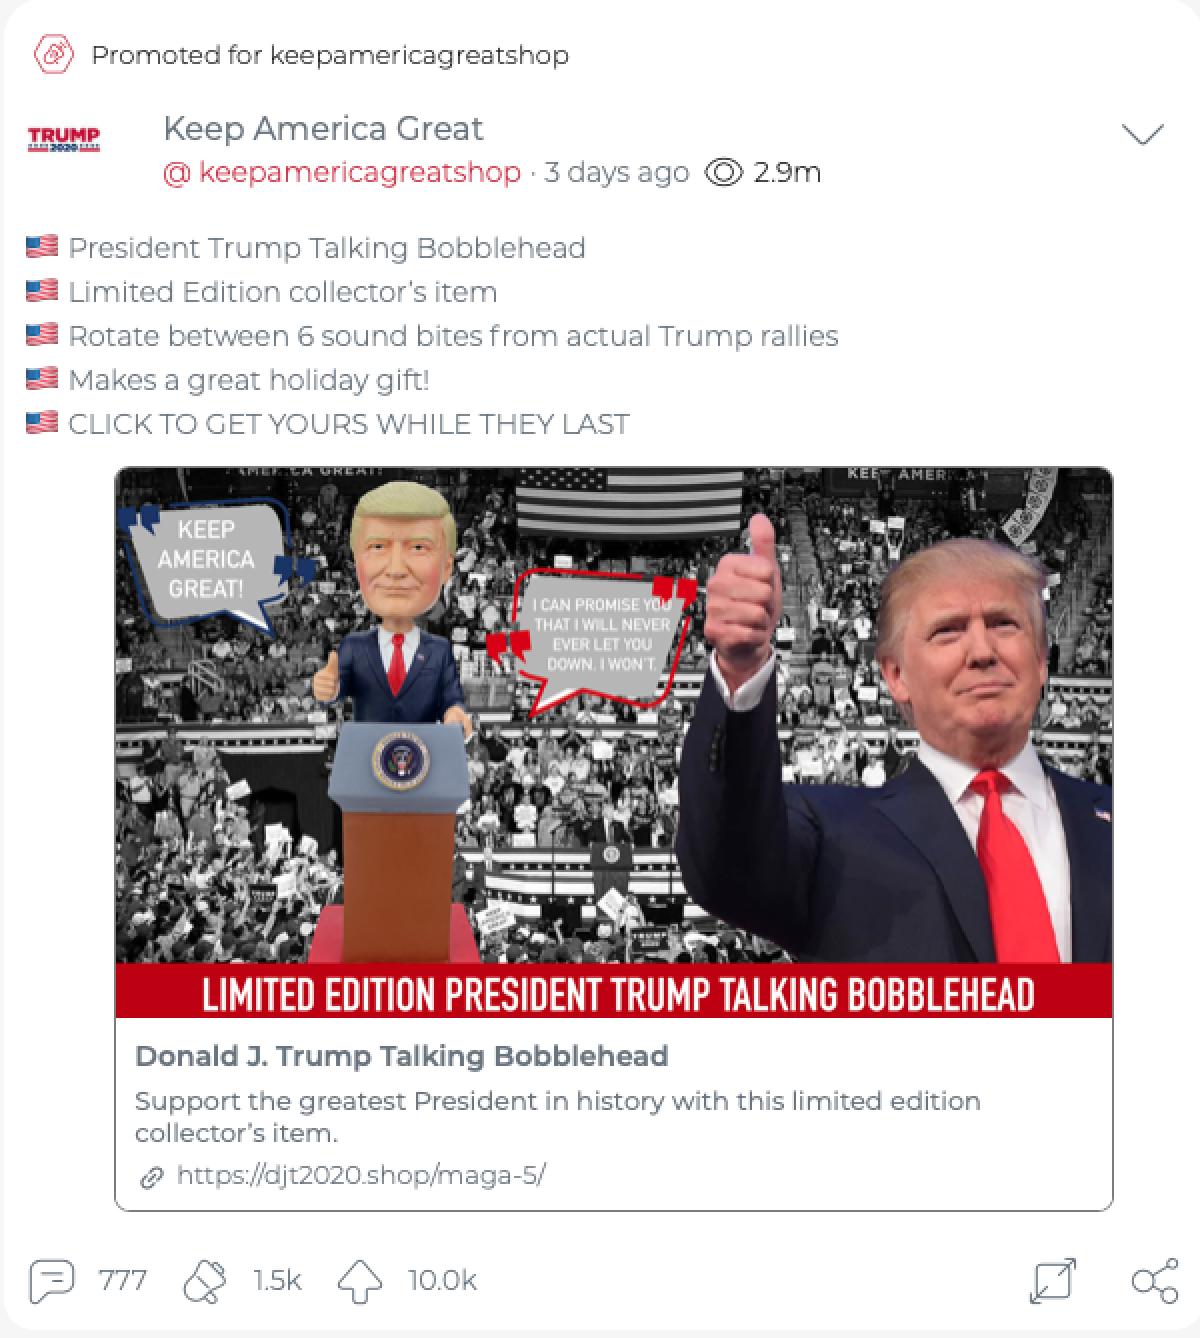 A screengrab shows an ad with a Donald Trump talking bobblehead doll